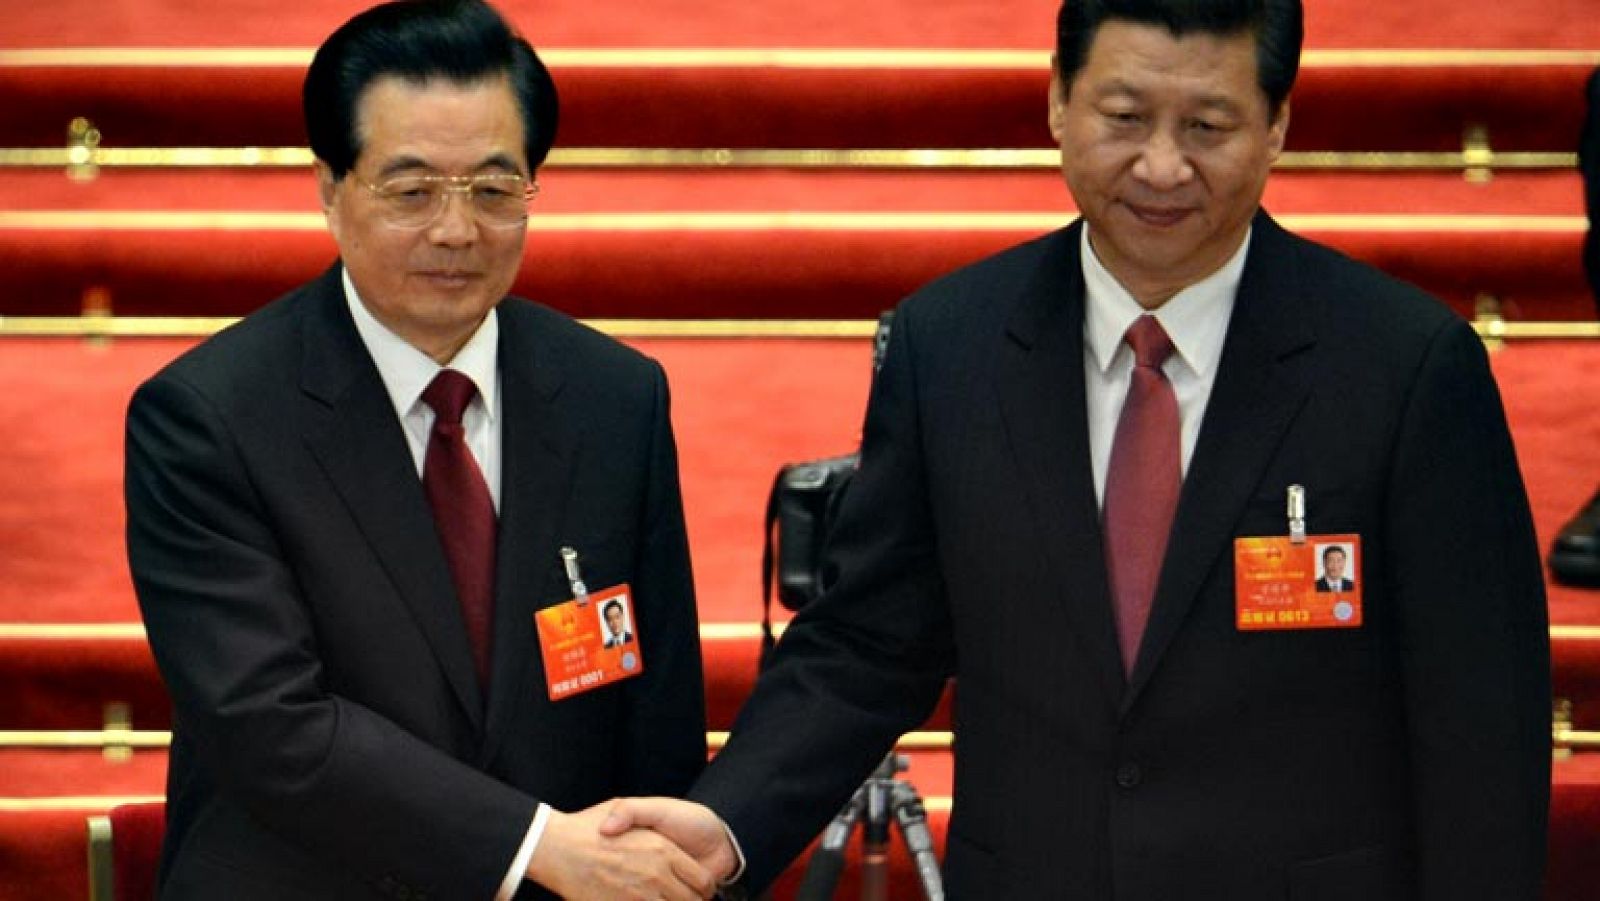 Telediario 1: Xi Jinping presidente de China | RTVE Play